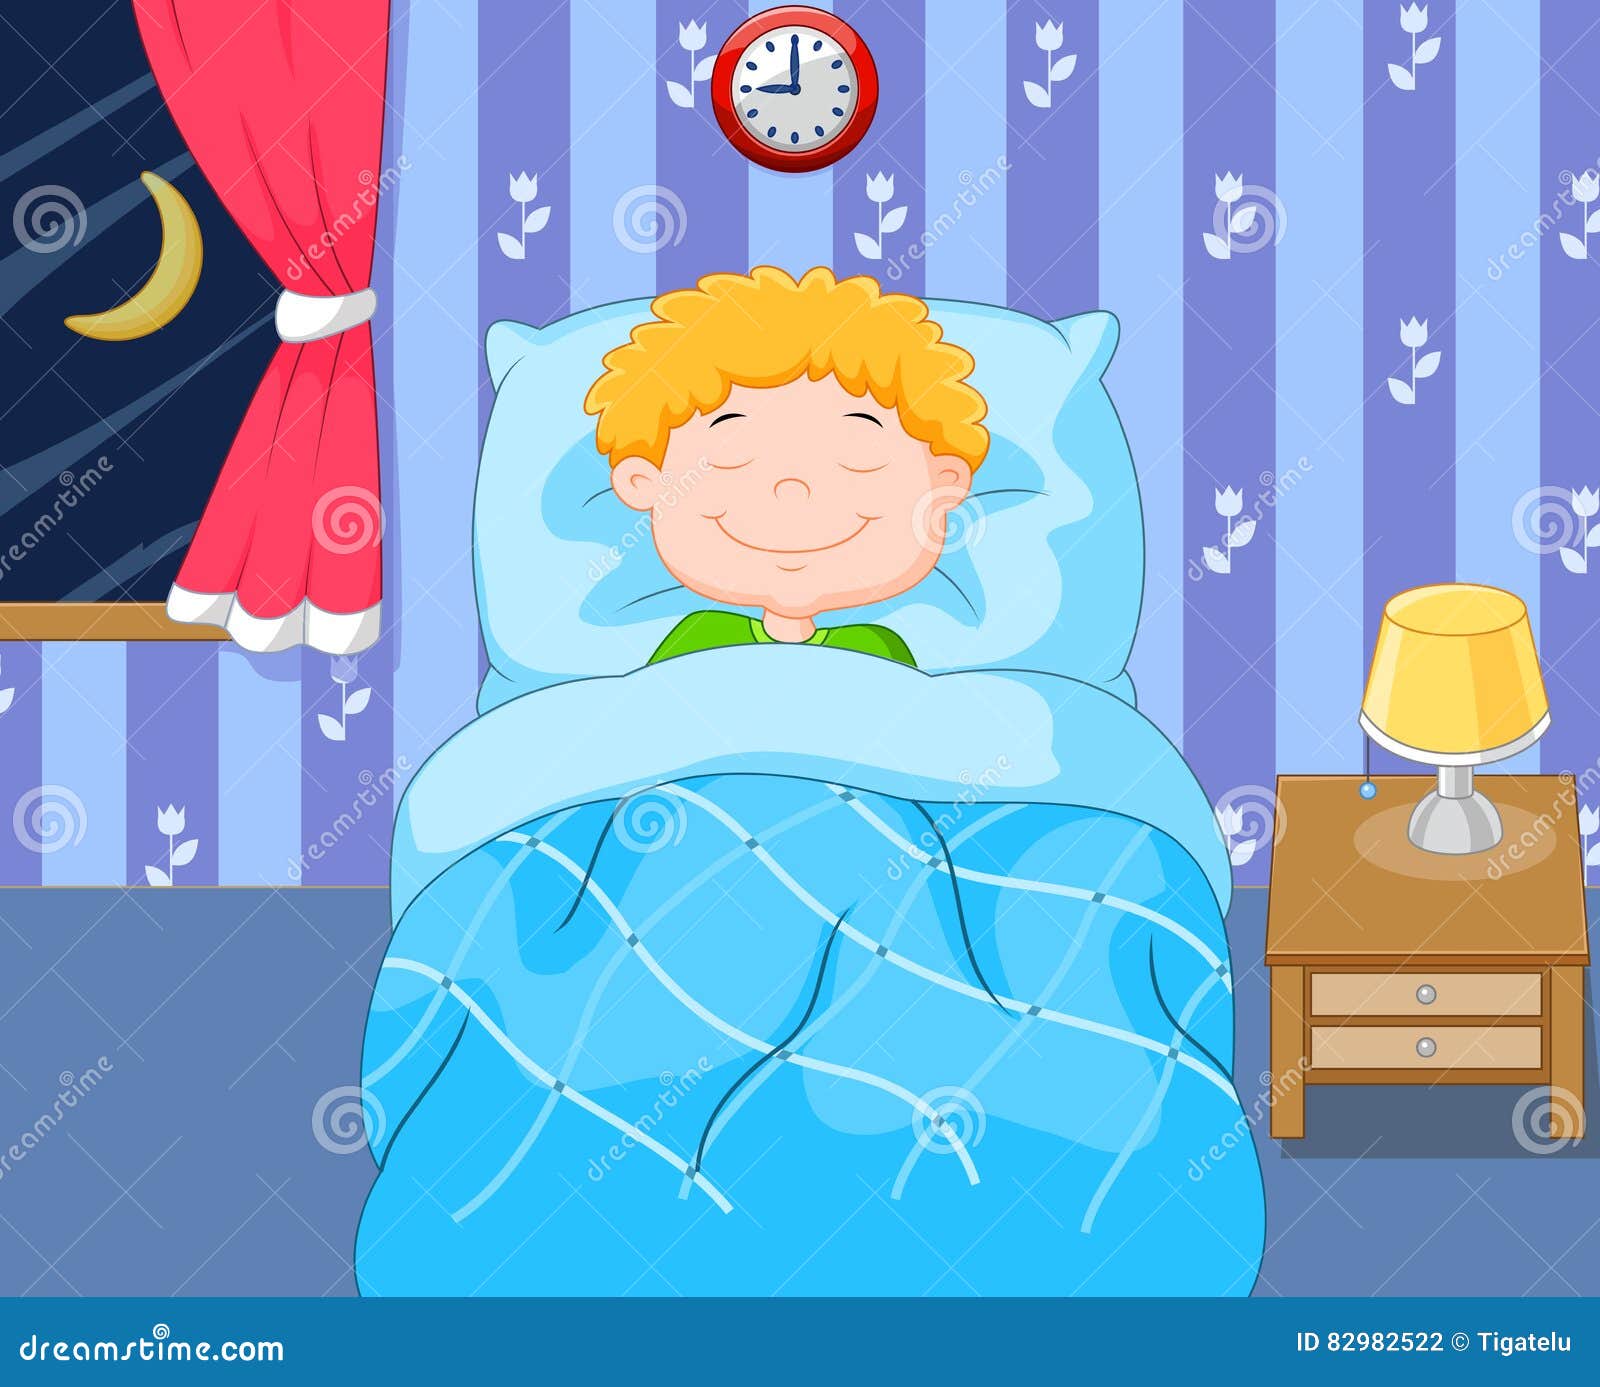 Cartoon boy sleeping stock vector. Illustration of comfortable - 82982522